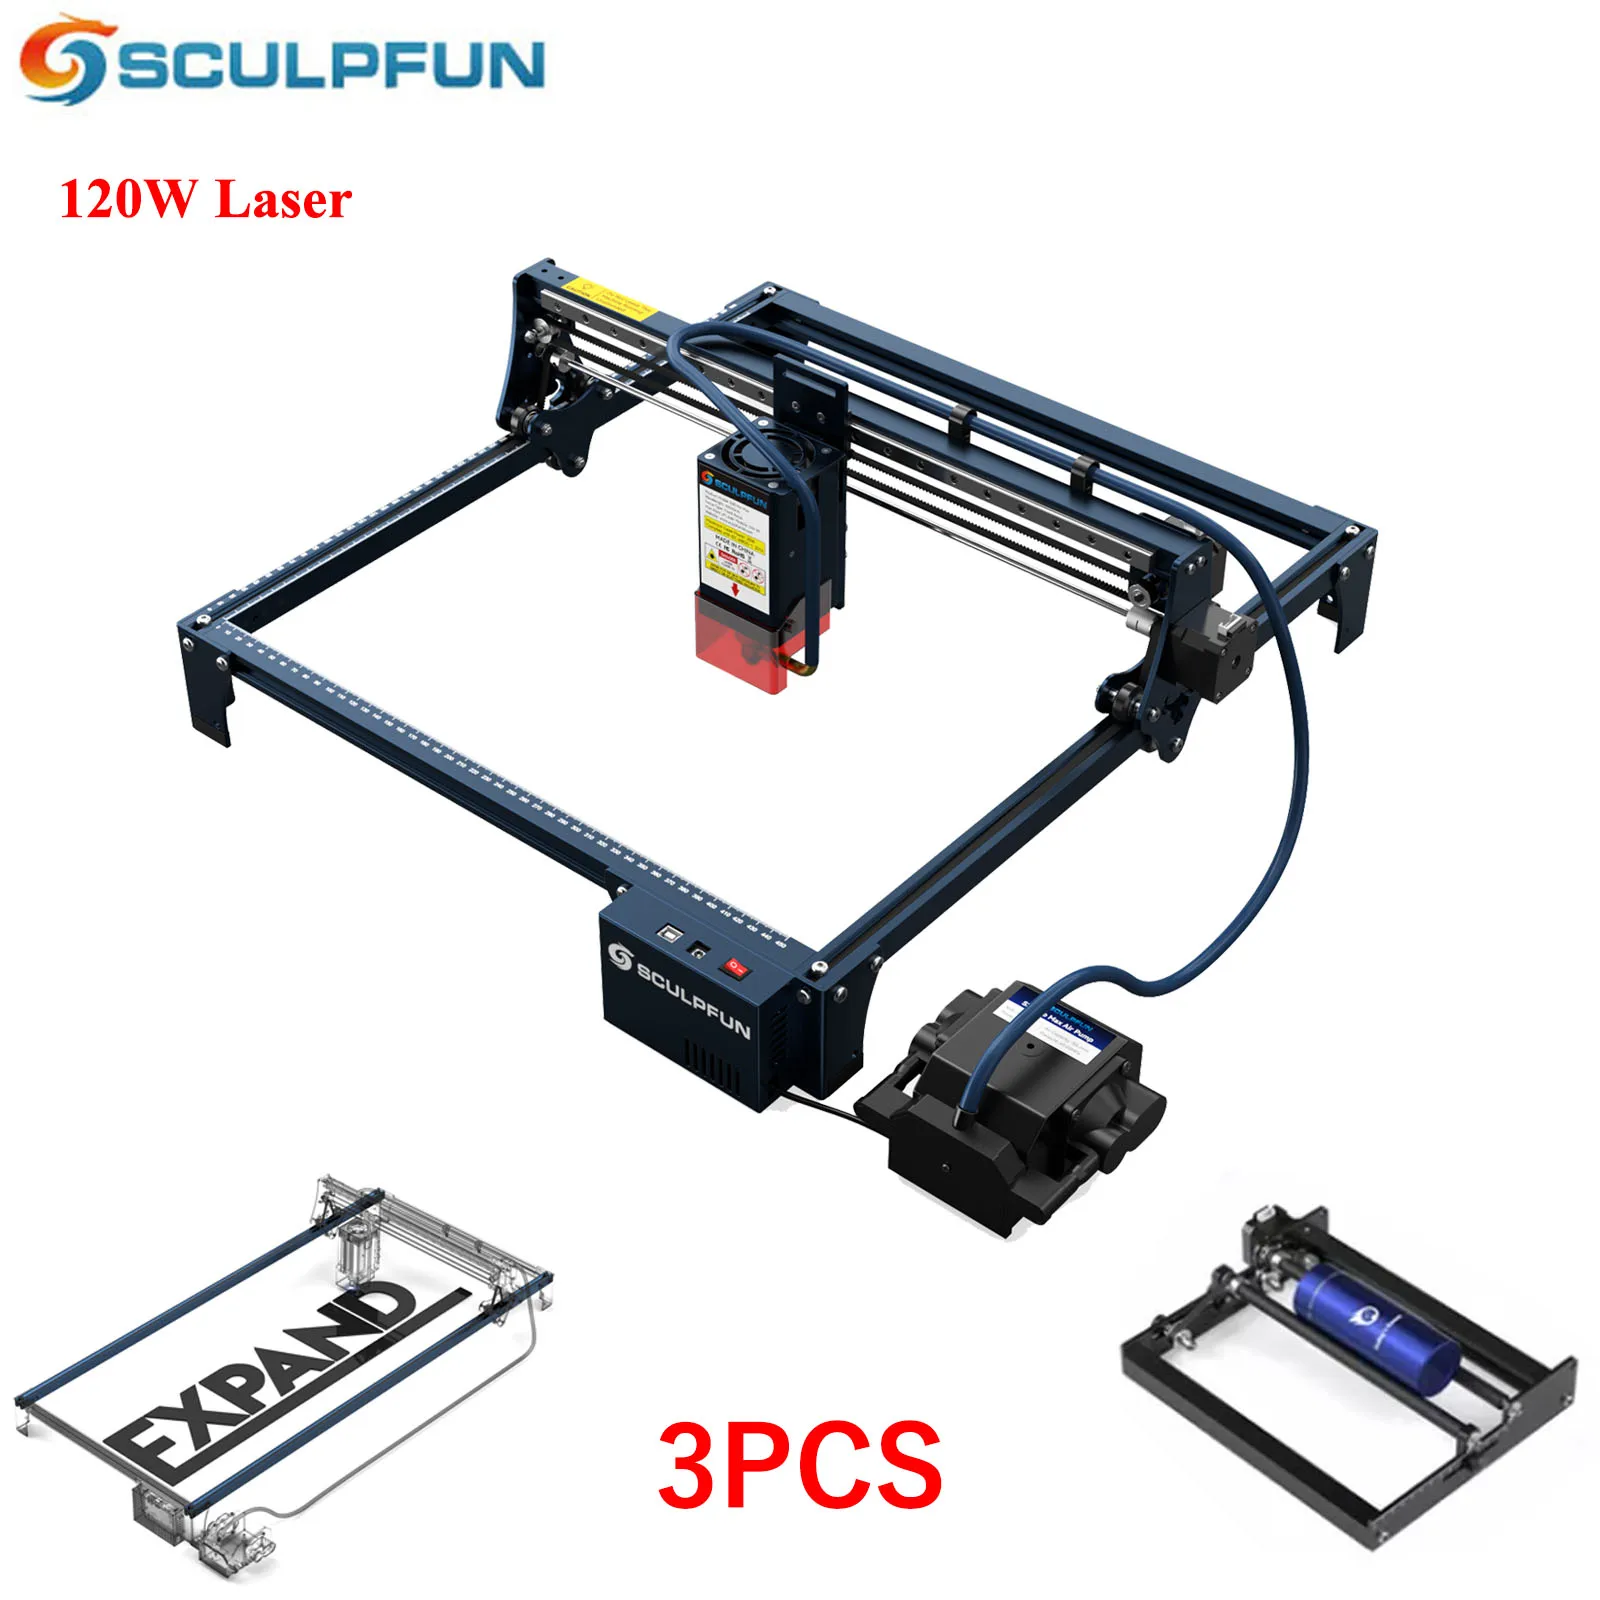 SCULPFUN S30 PRO MAX Set 120W Laser Engraver Automatic Air-assist System 20W Laser Module Cutting Machine 410x400mm Working Area